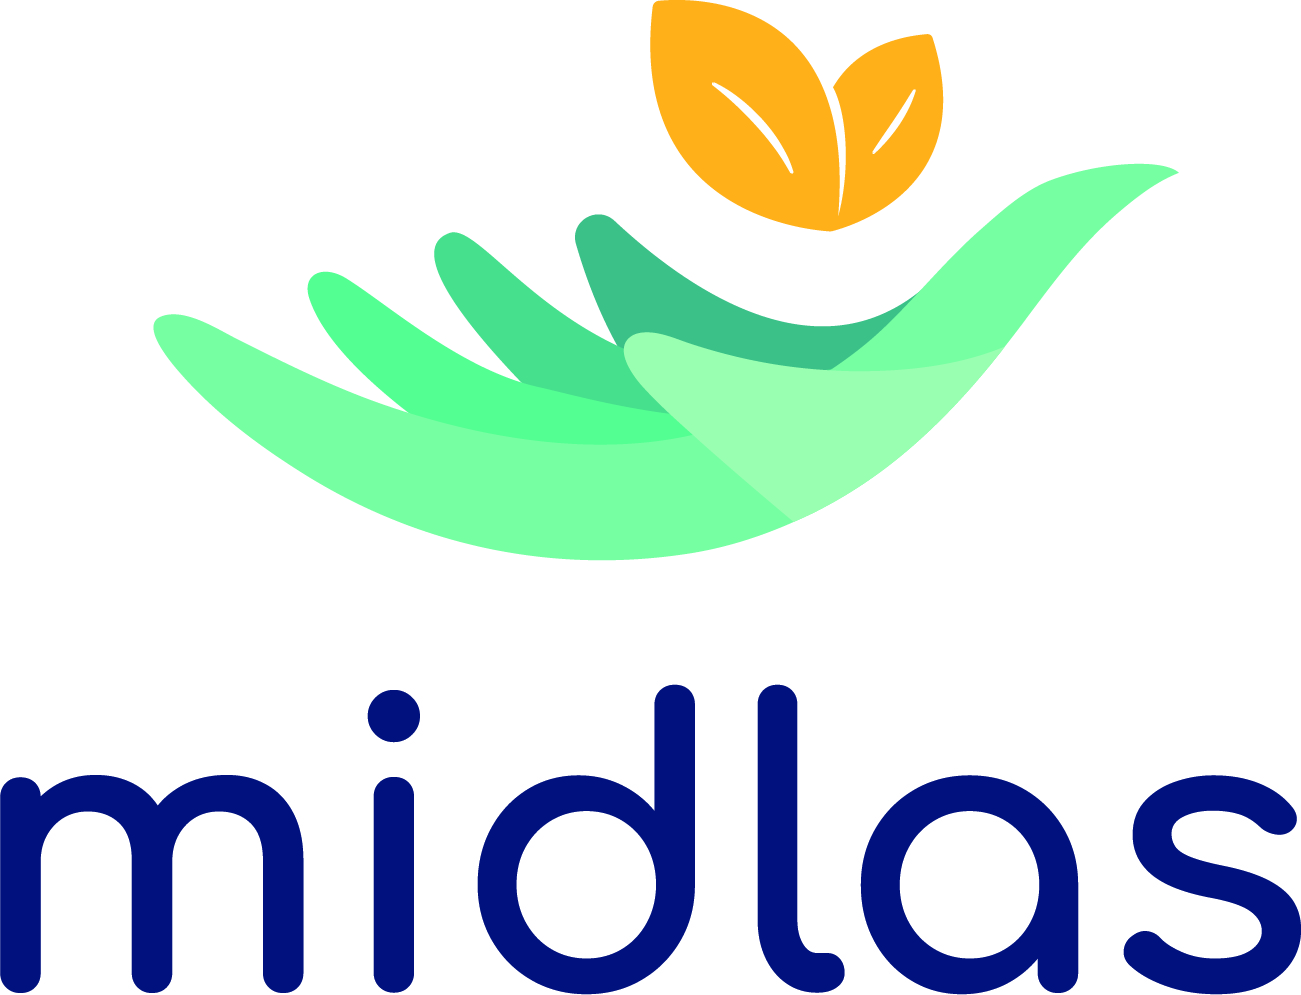 Midland Debt, Information and Advocacy Service (MIDLAS)